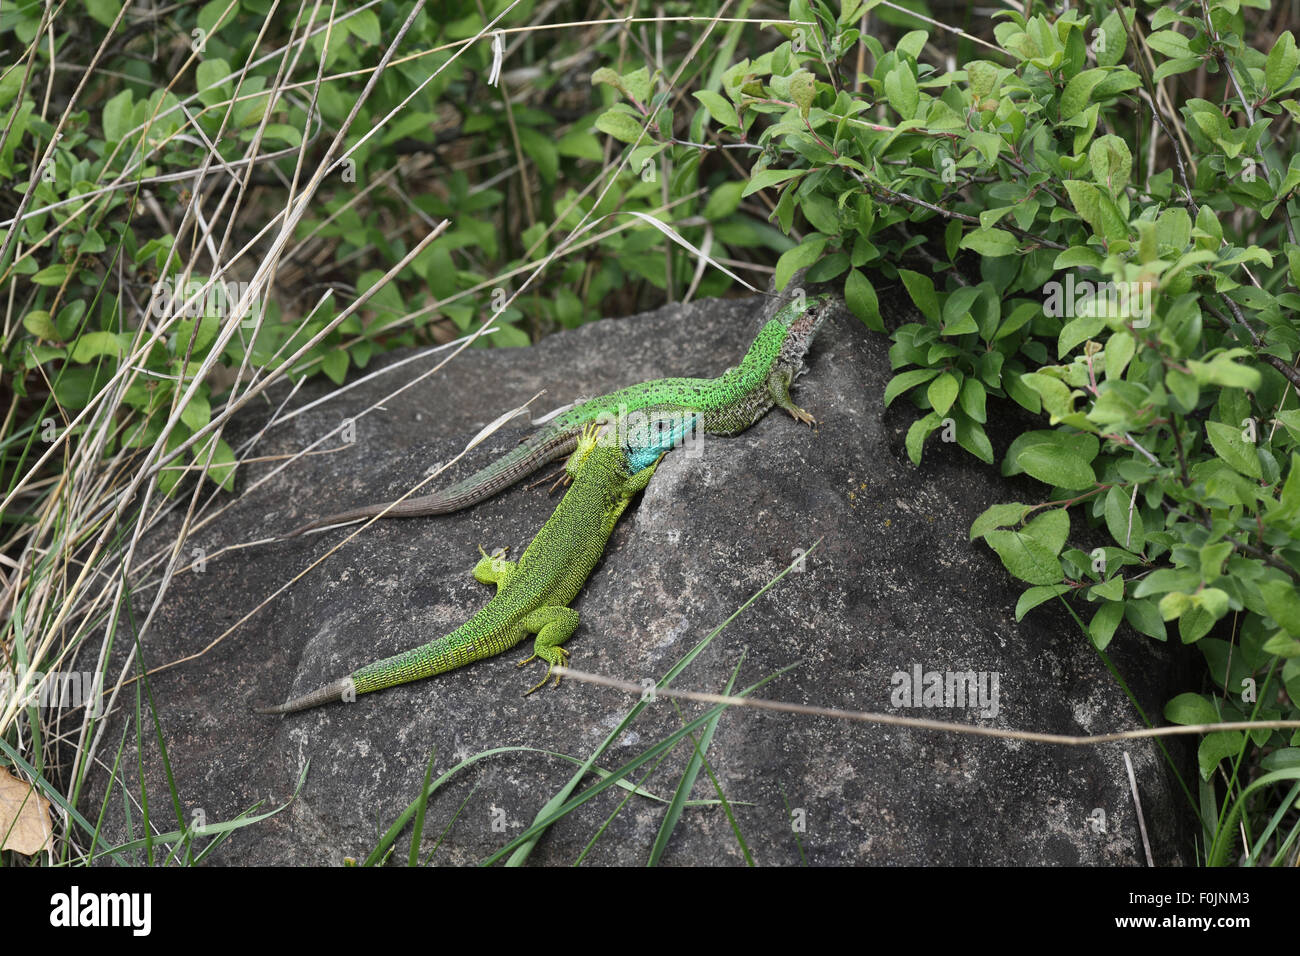 Lacerta viridis Green lizard pair basking on rock Stock Photo